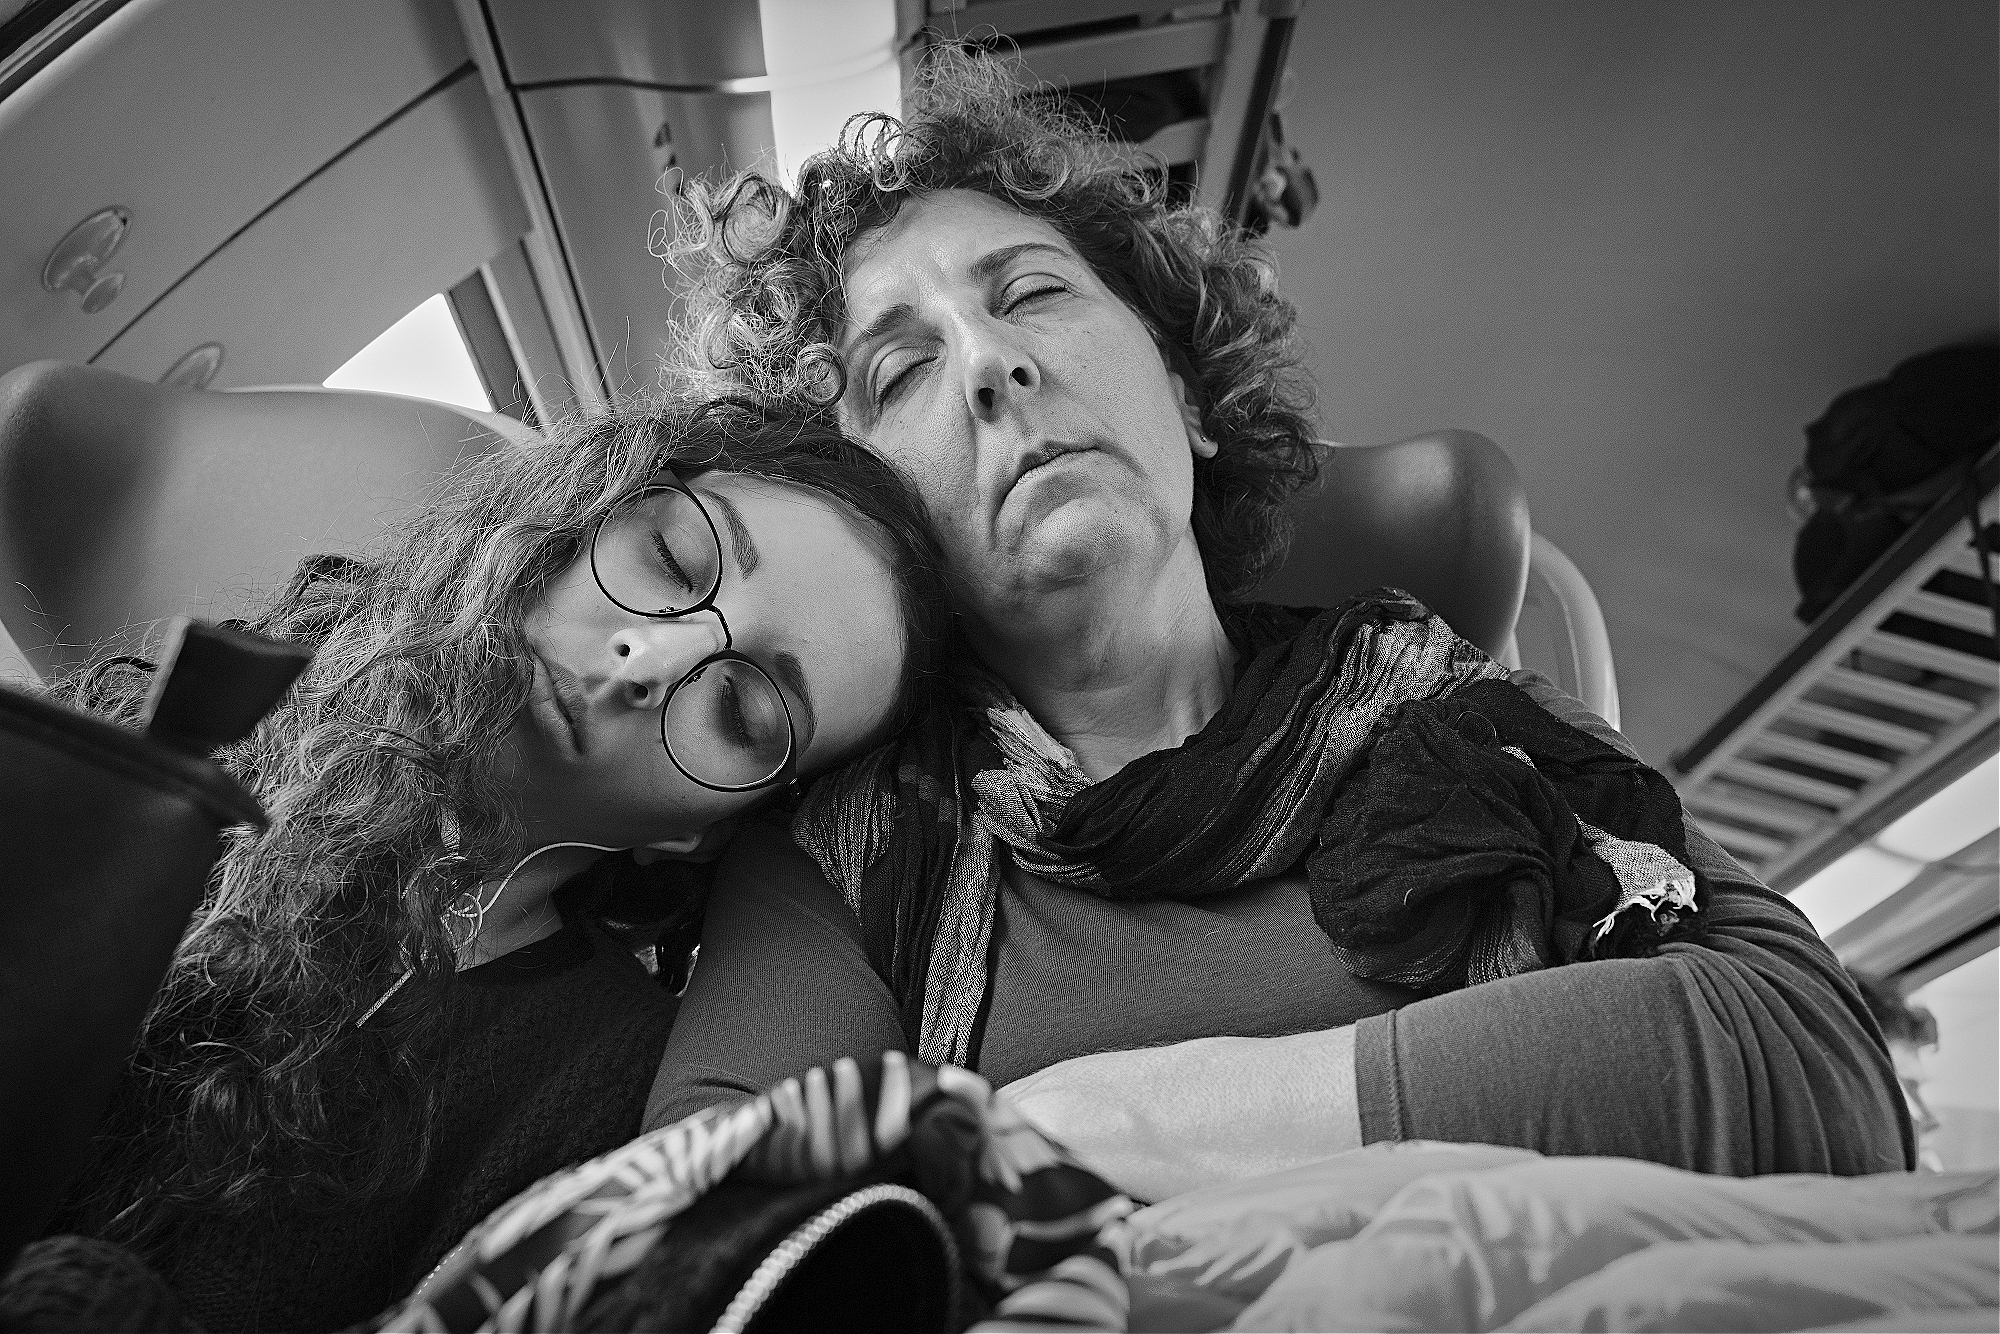 Sleepers on the sleepers, On the train between Milan and Verona